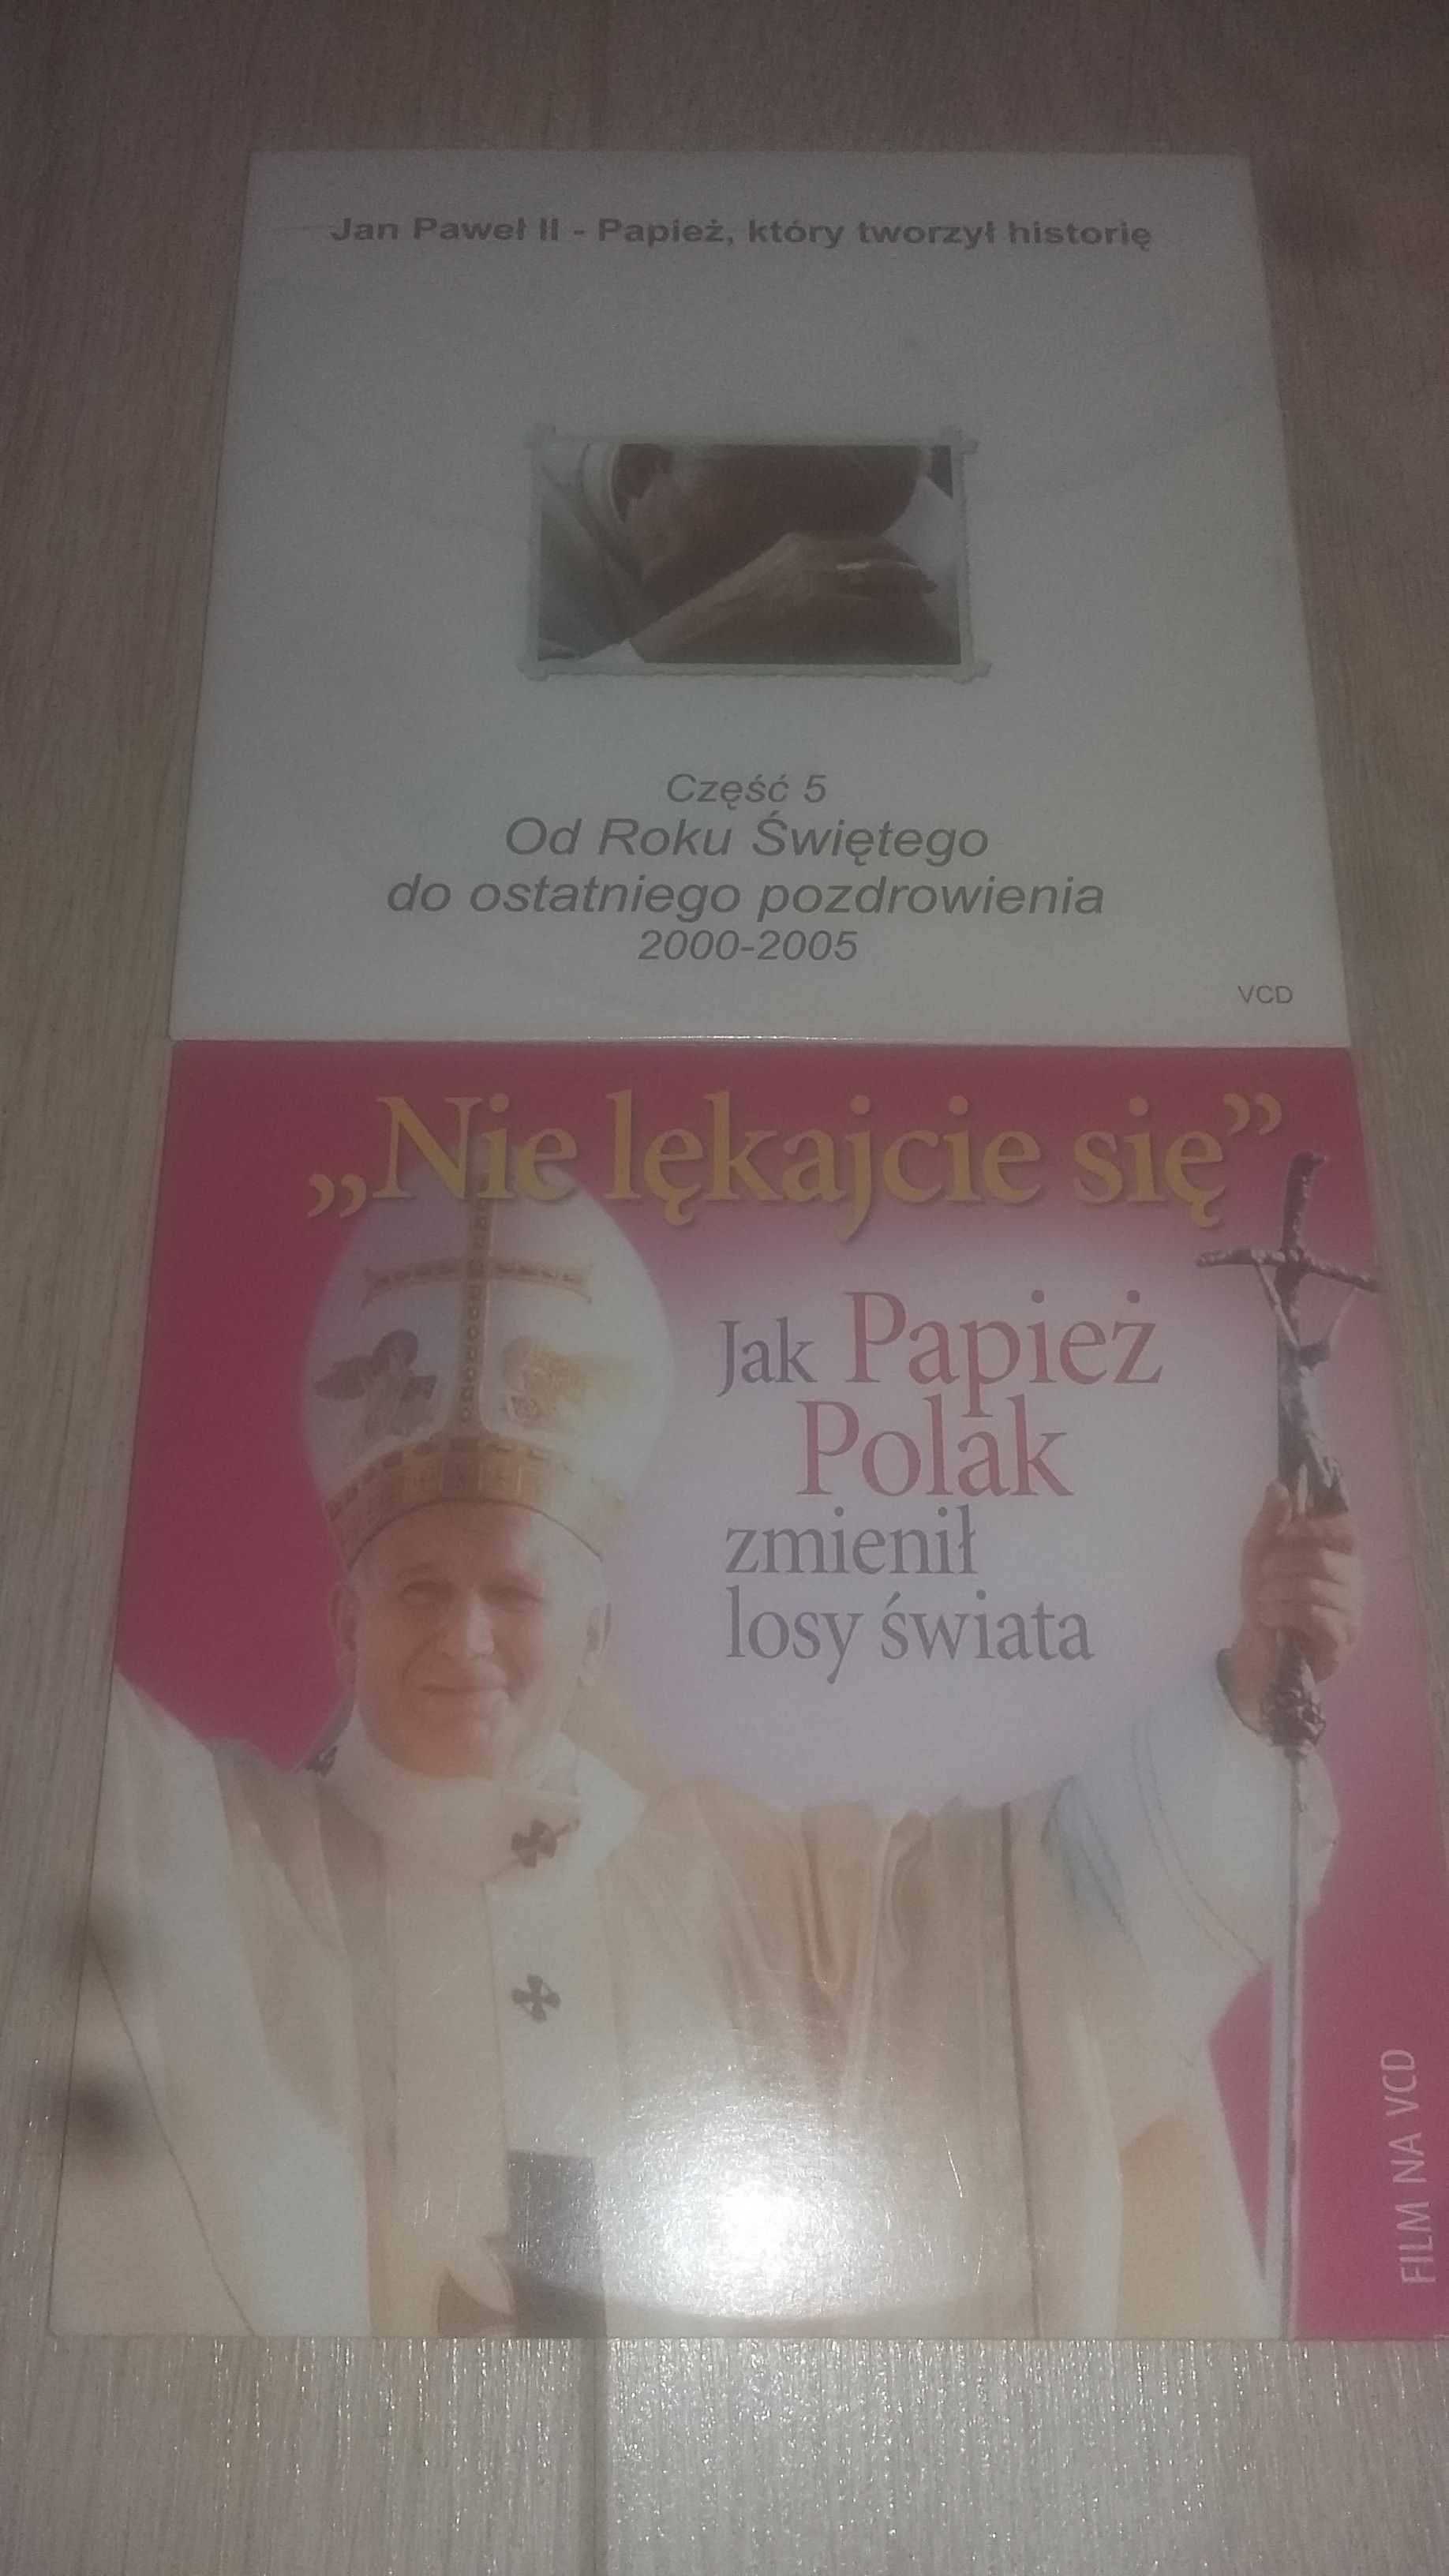 Dvd - Jan Paweł II sztuk 12